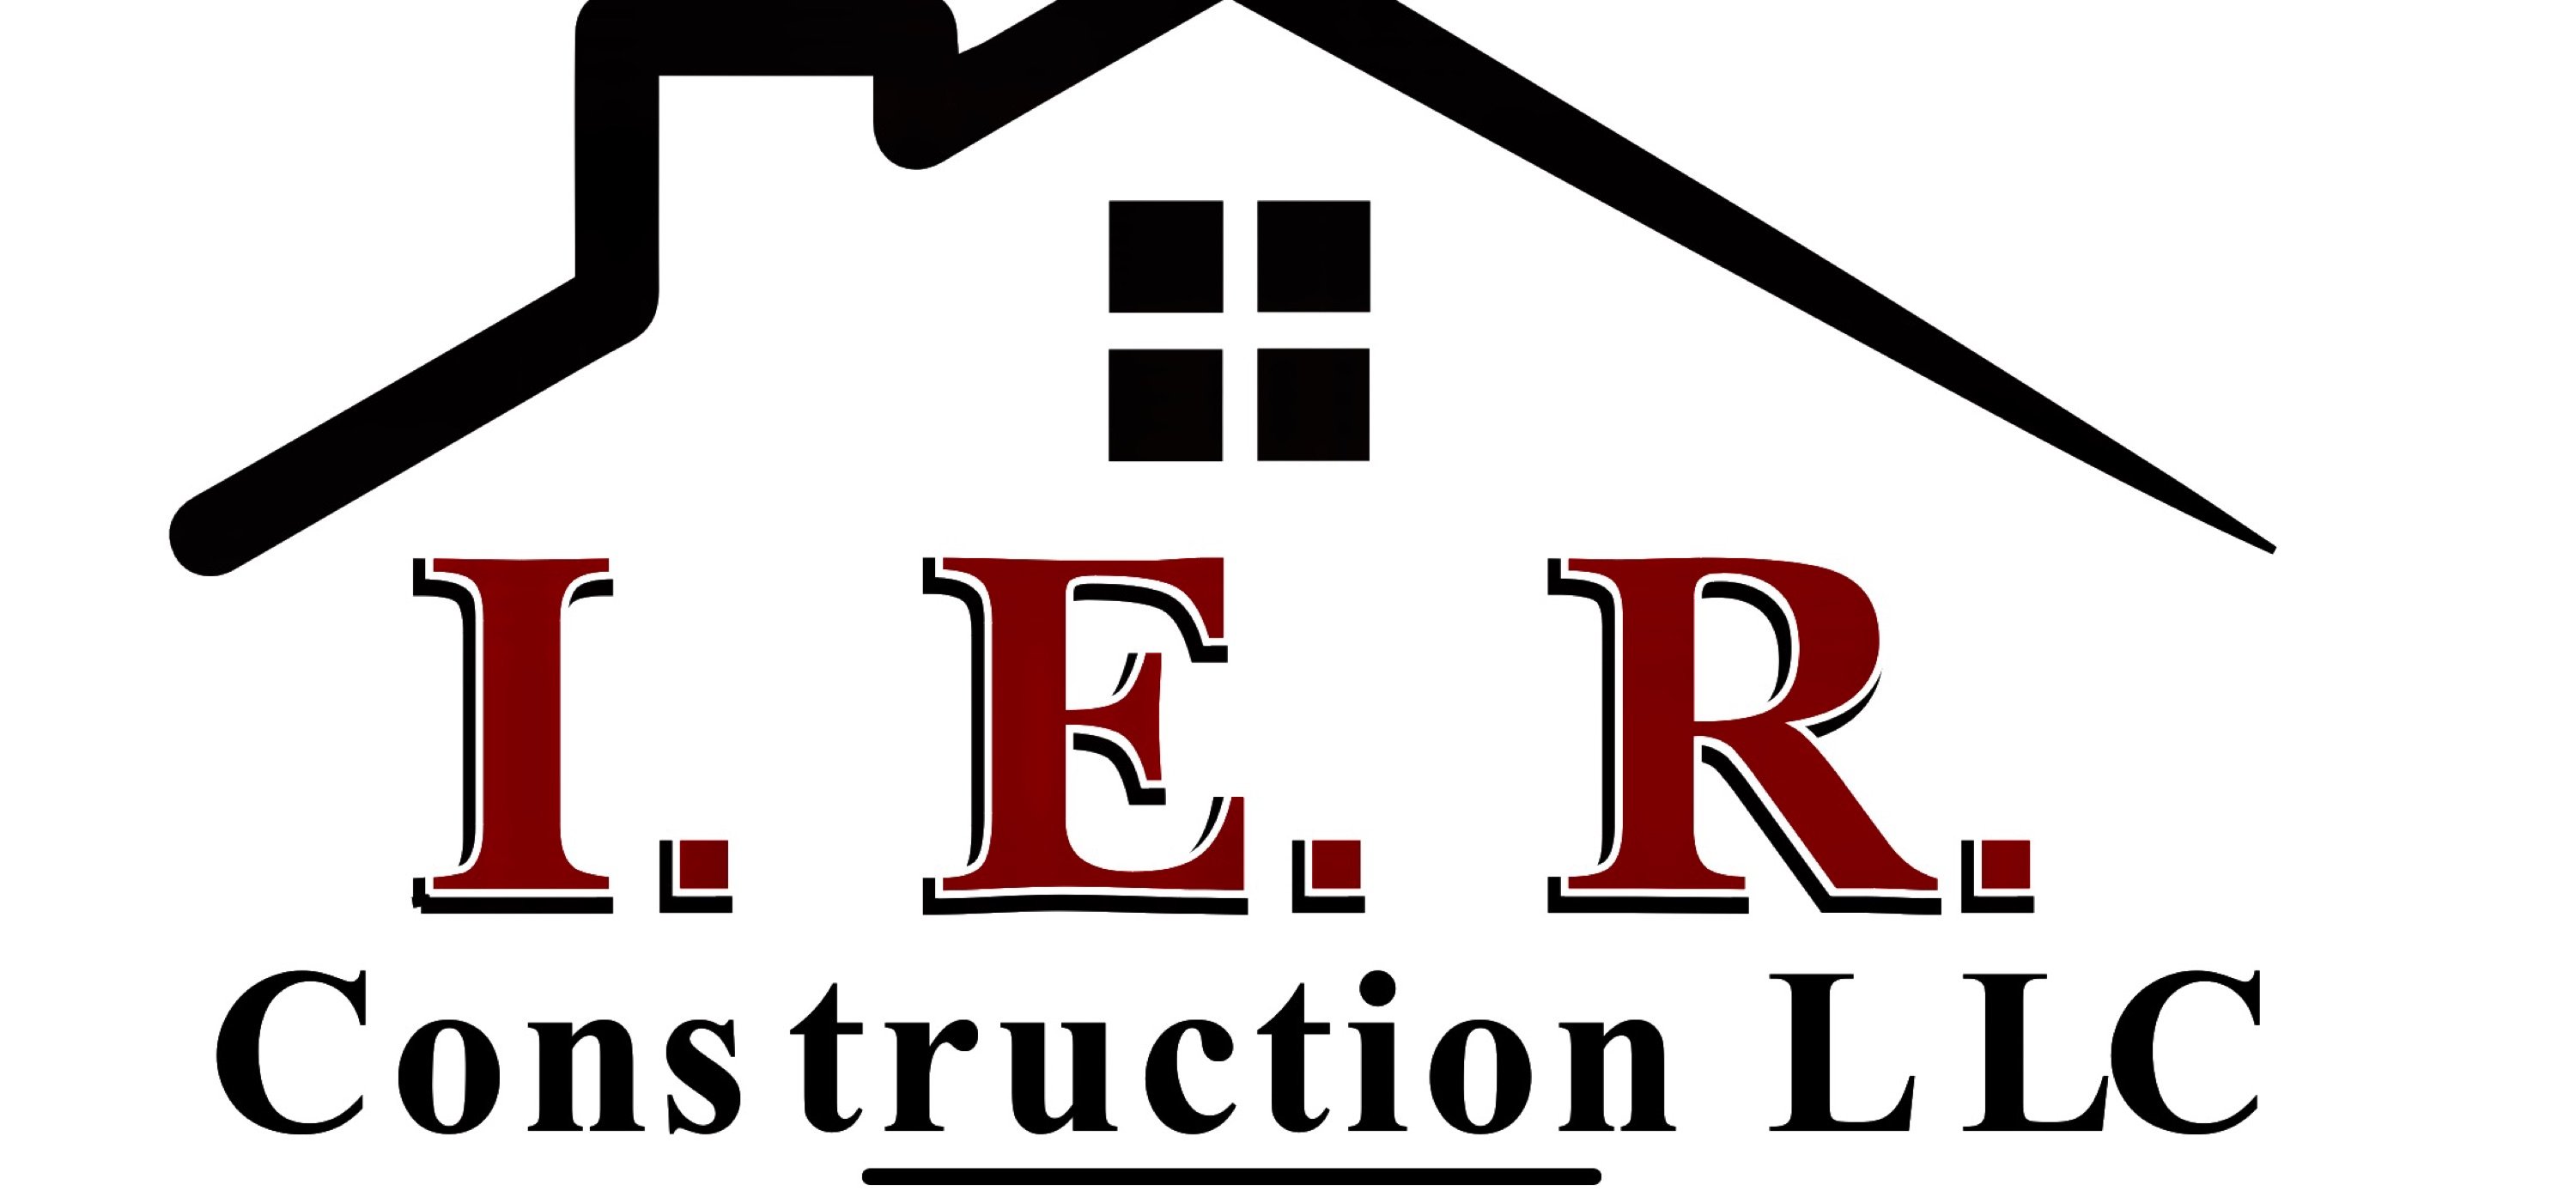 I.E.R. Construction, LLC Logo